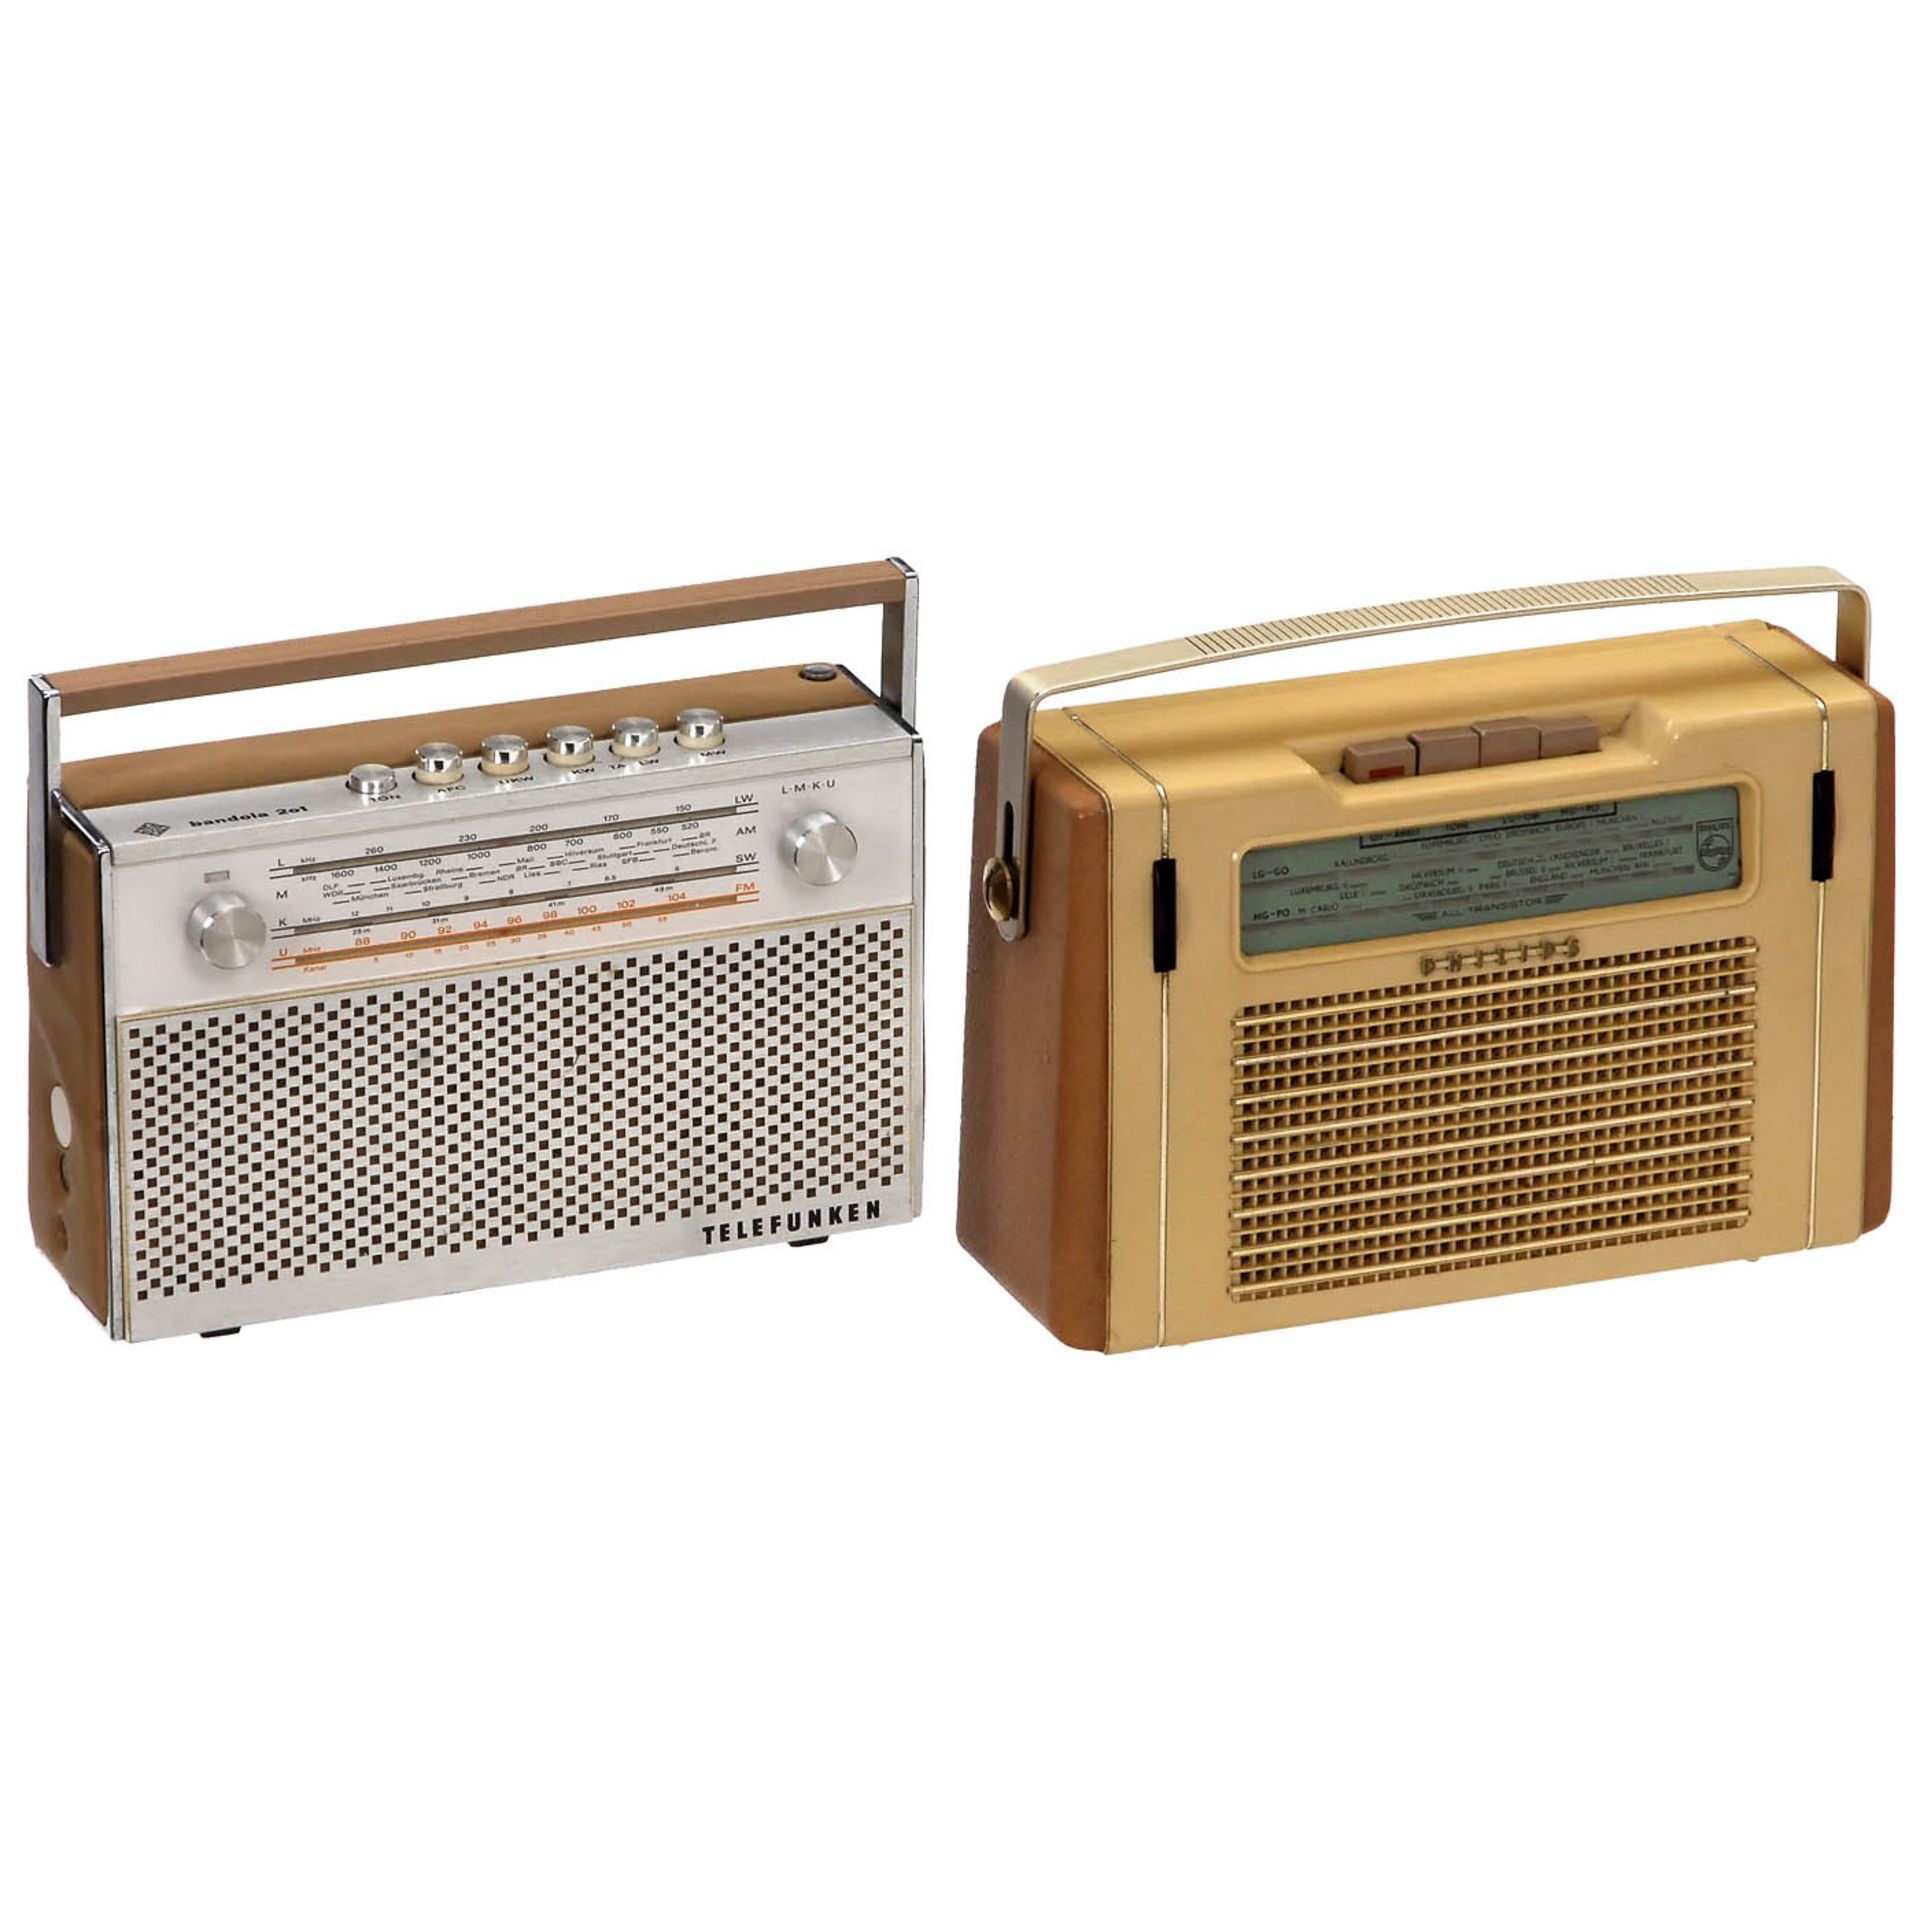 Ten Portable Radios - Image 5 of 6